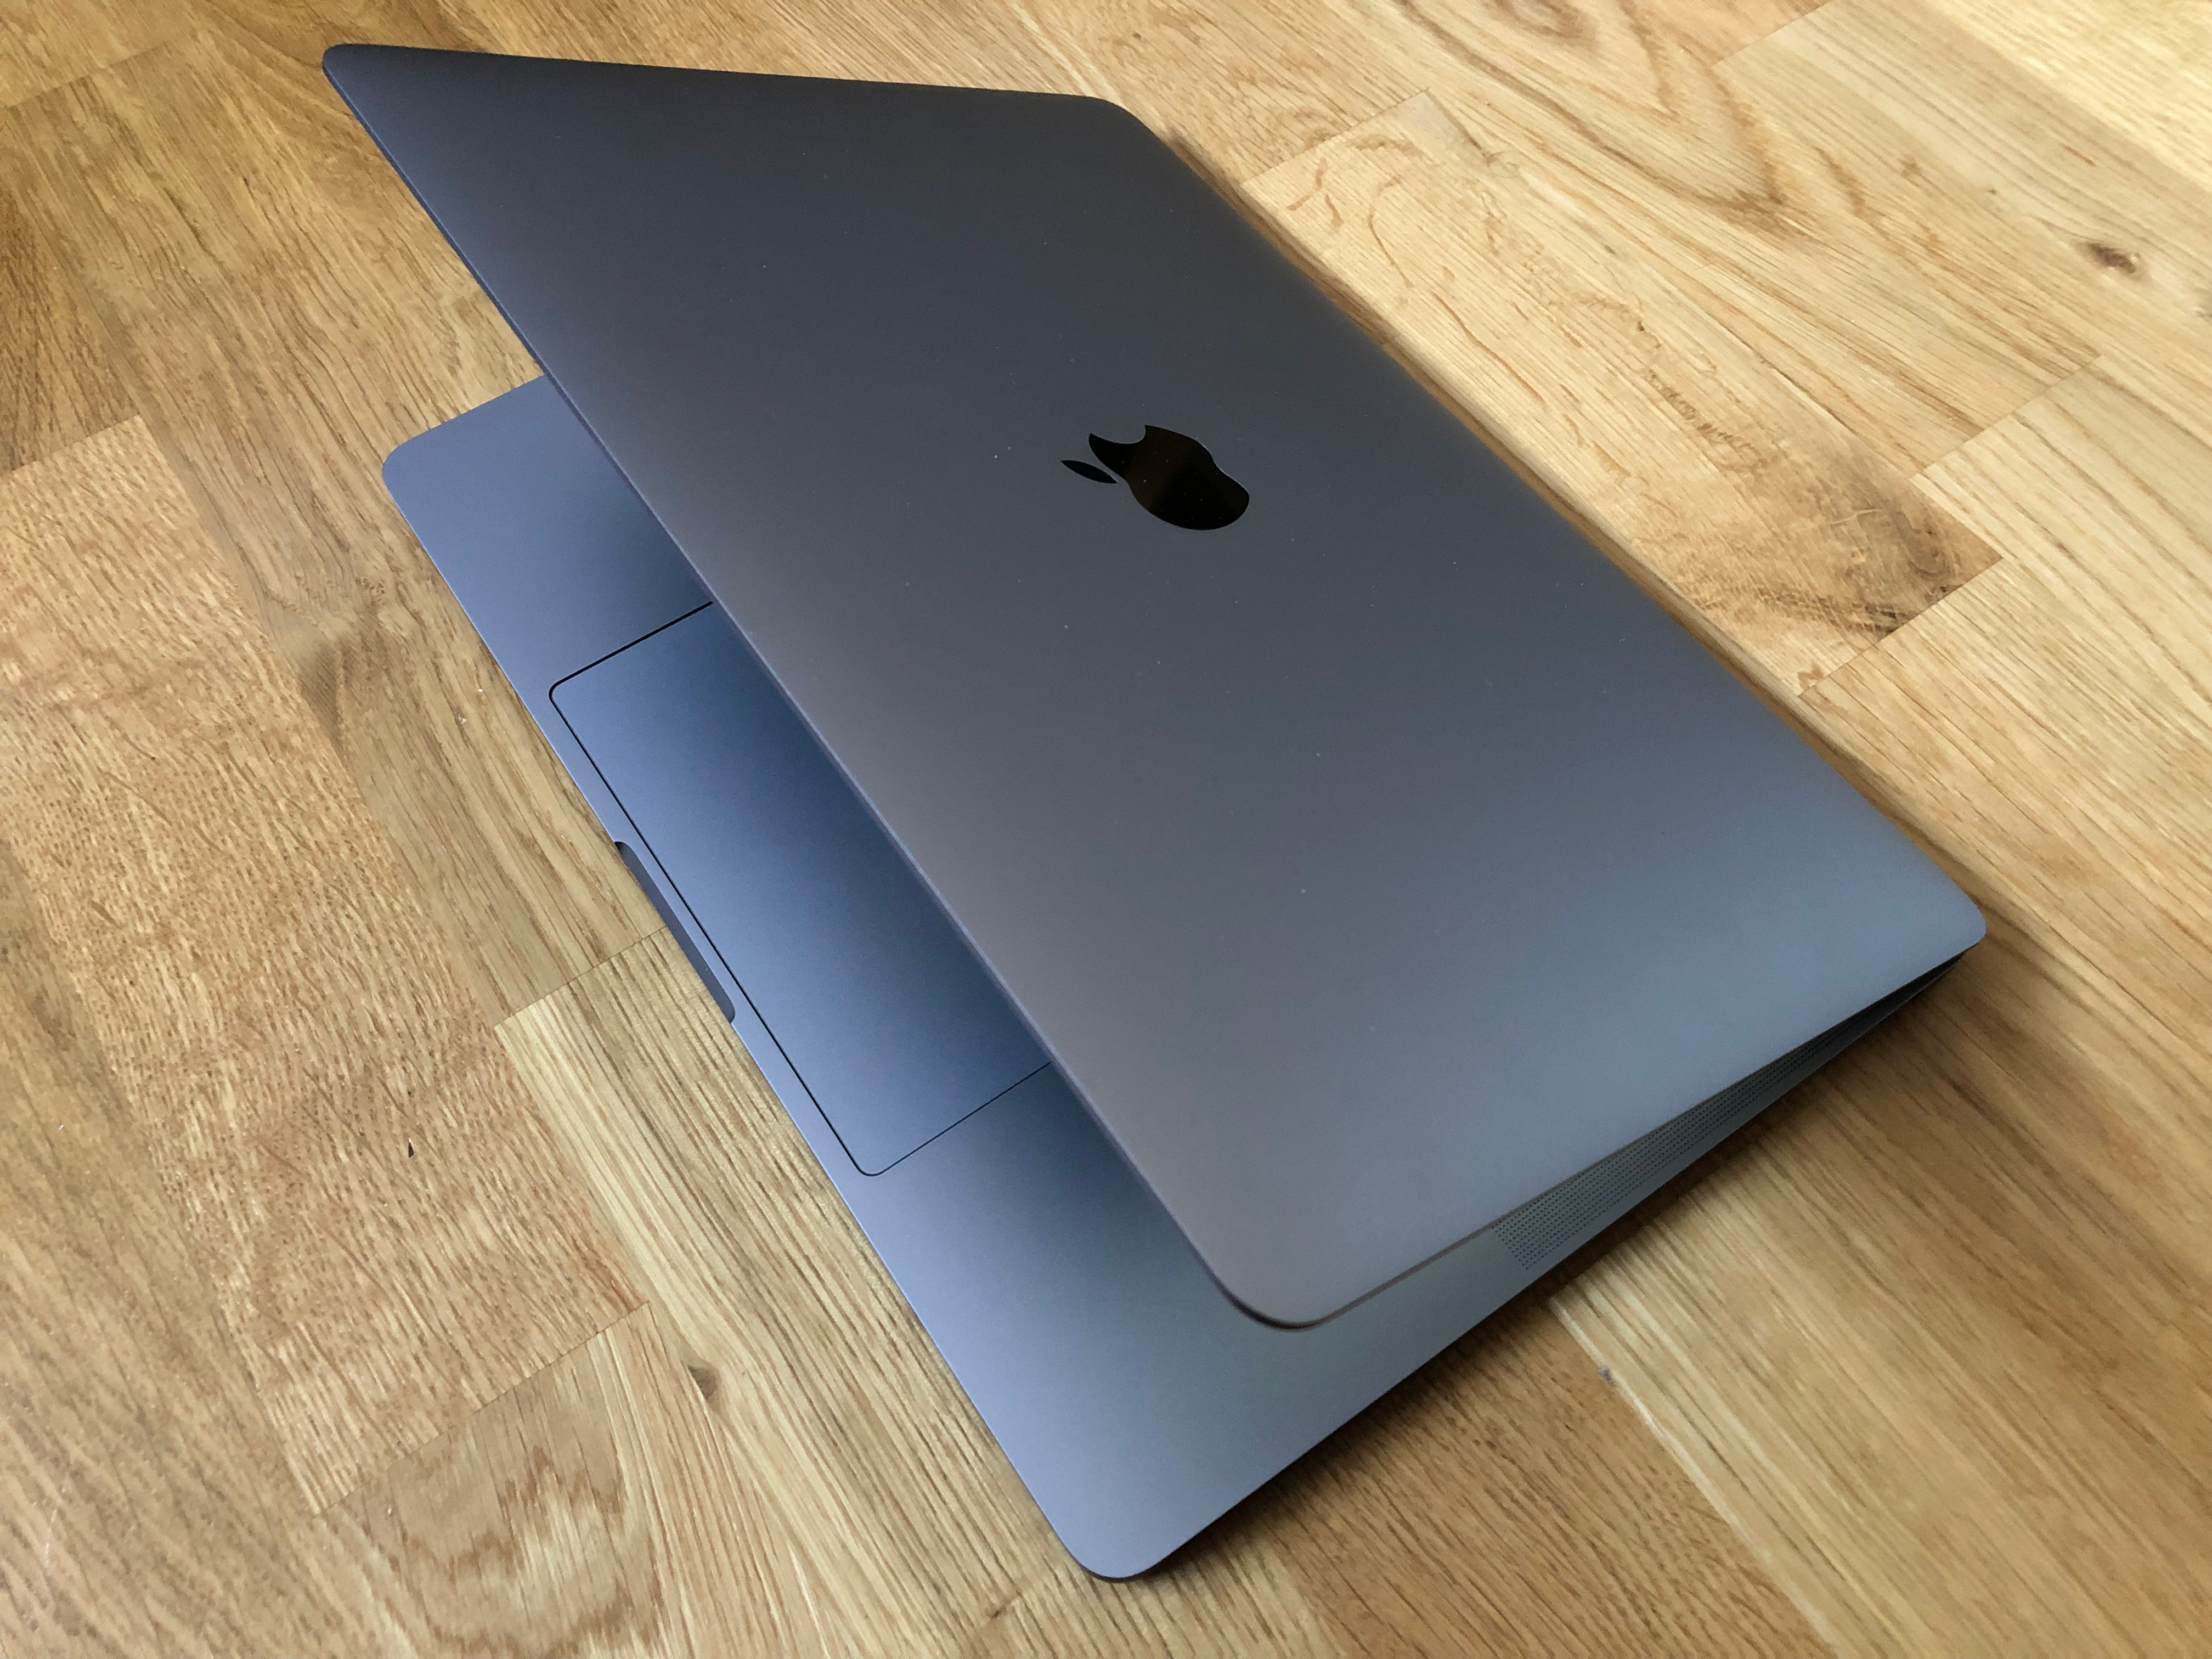 Apple MacBook Air (2018) vs MacBook vs. MacBook Pro: Which should you buy?